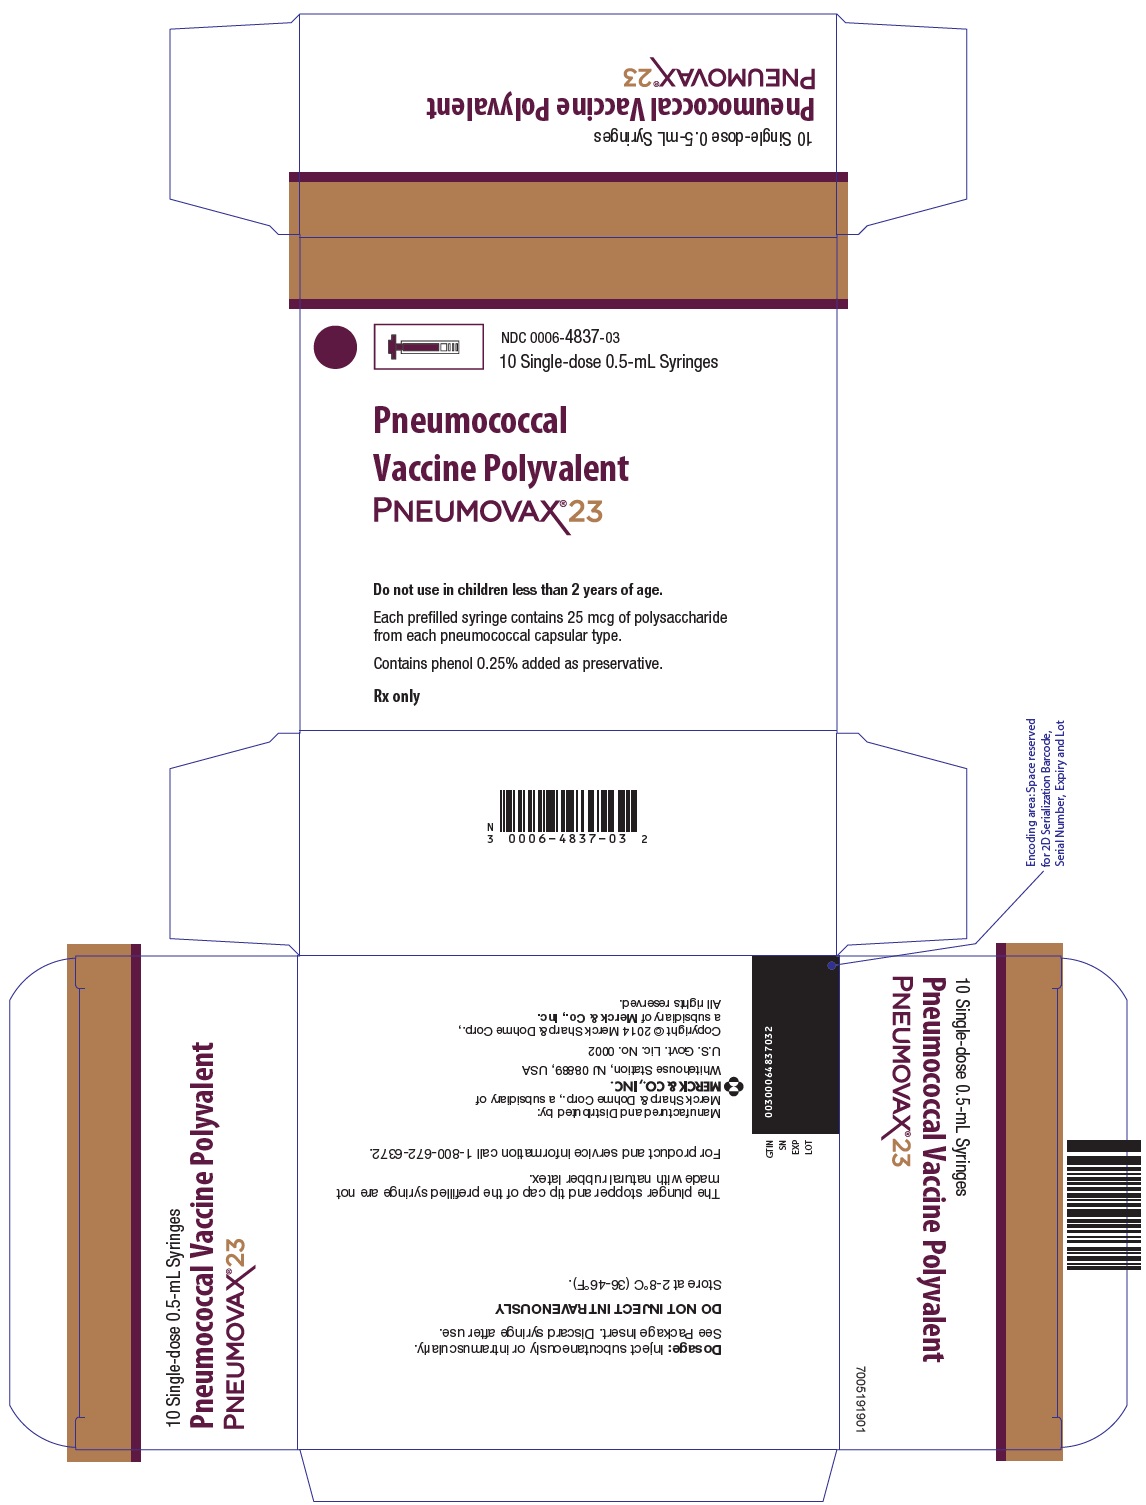 PRINCIPAL DISPLAY PANEL - 0.5-mL Syringes